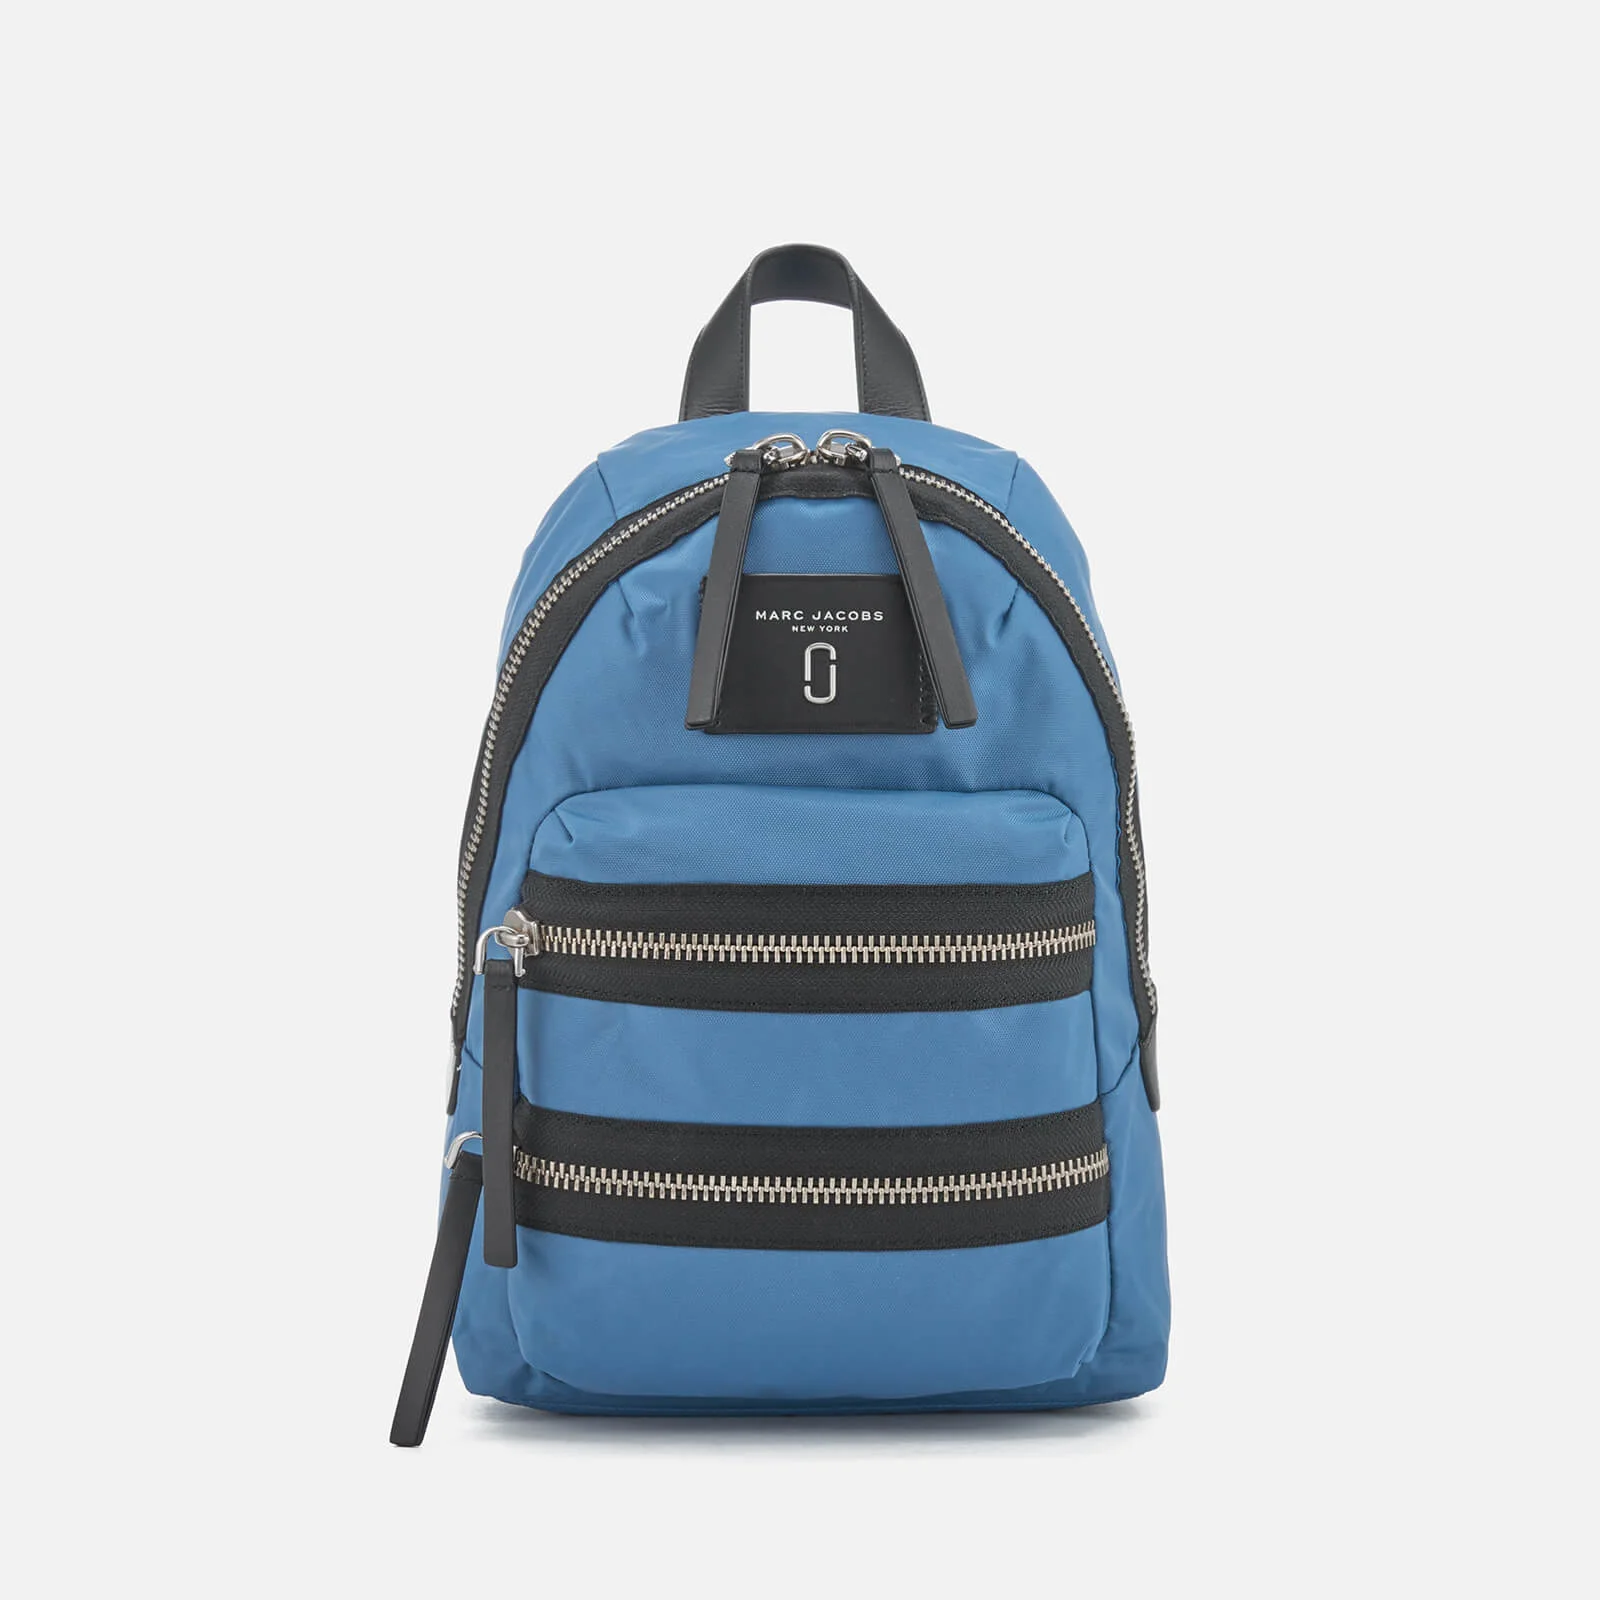 Marc Jacobs Women's Mini Backpack - Vintage Blue Image 1